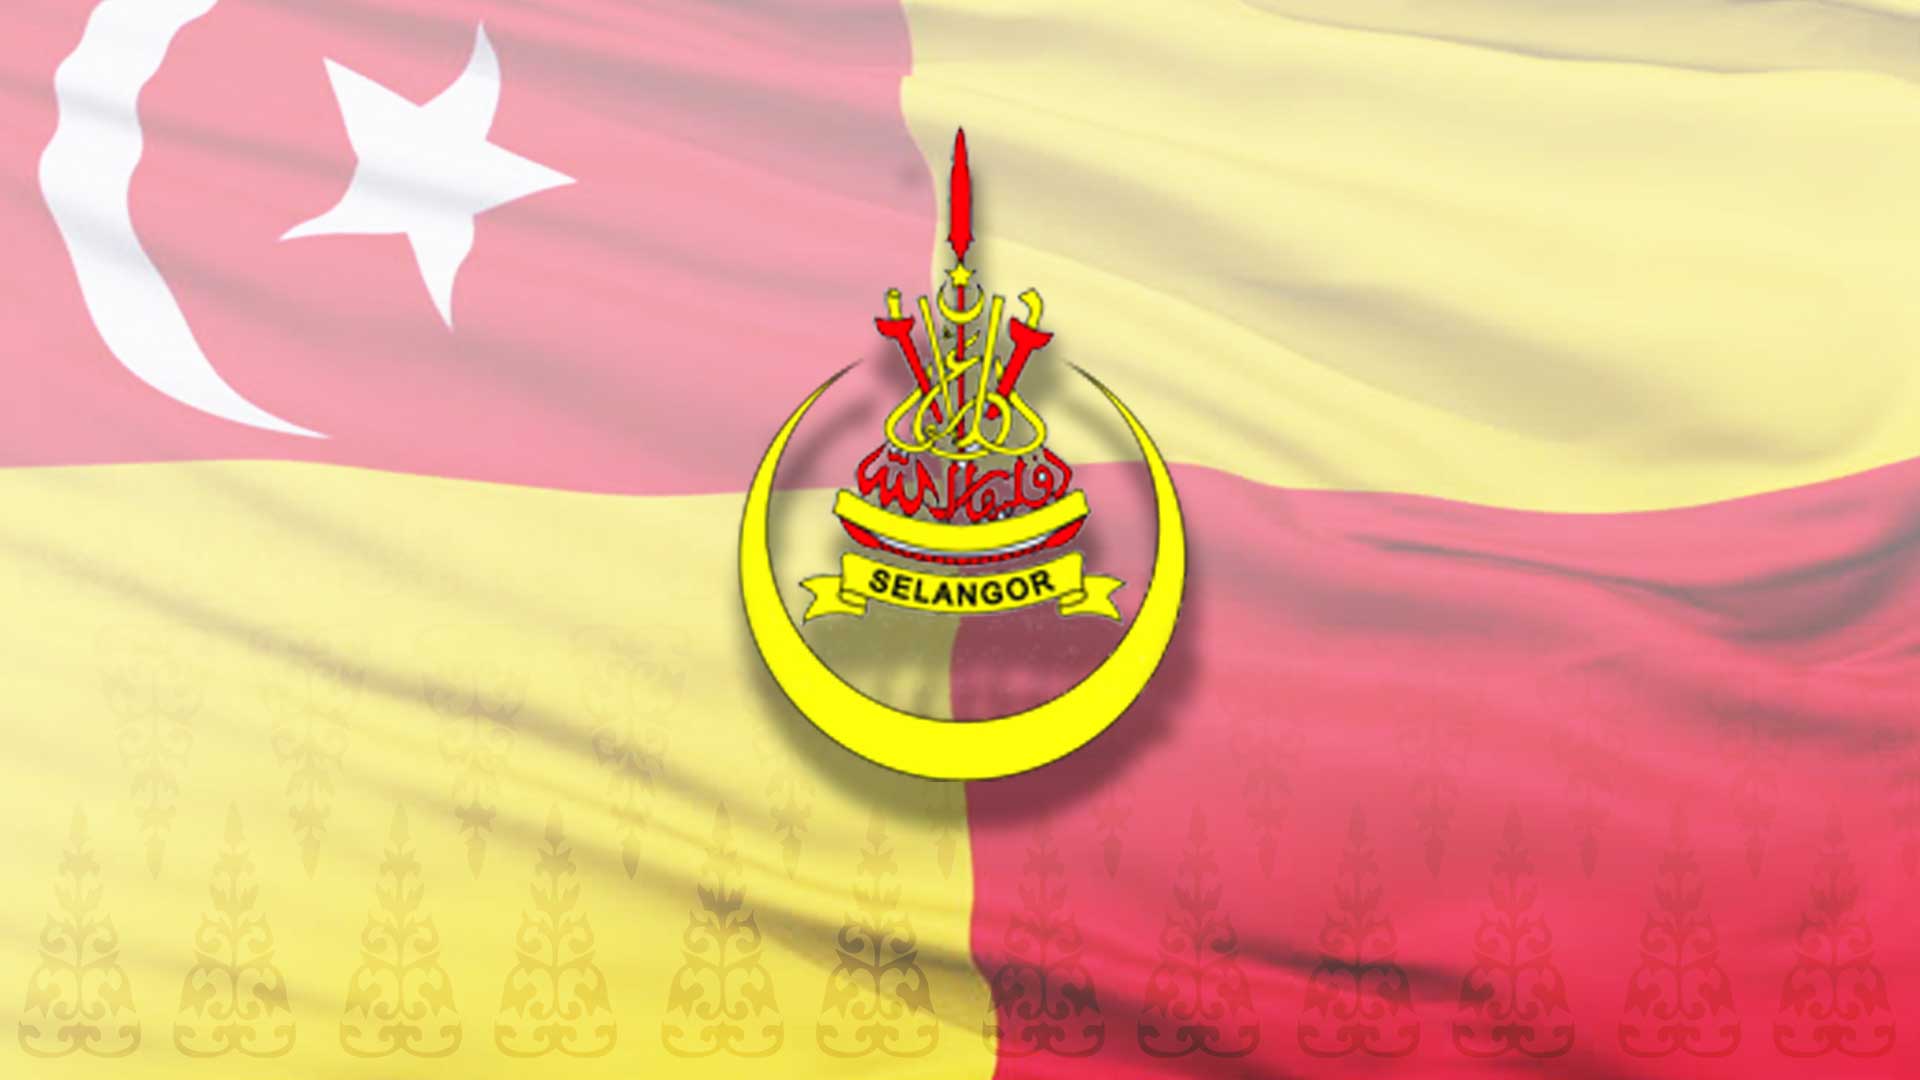 Selangor 2021 sultan